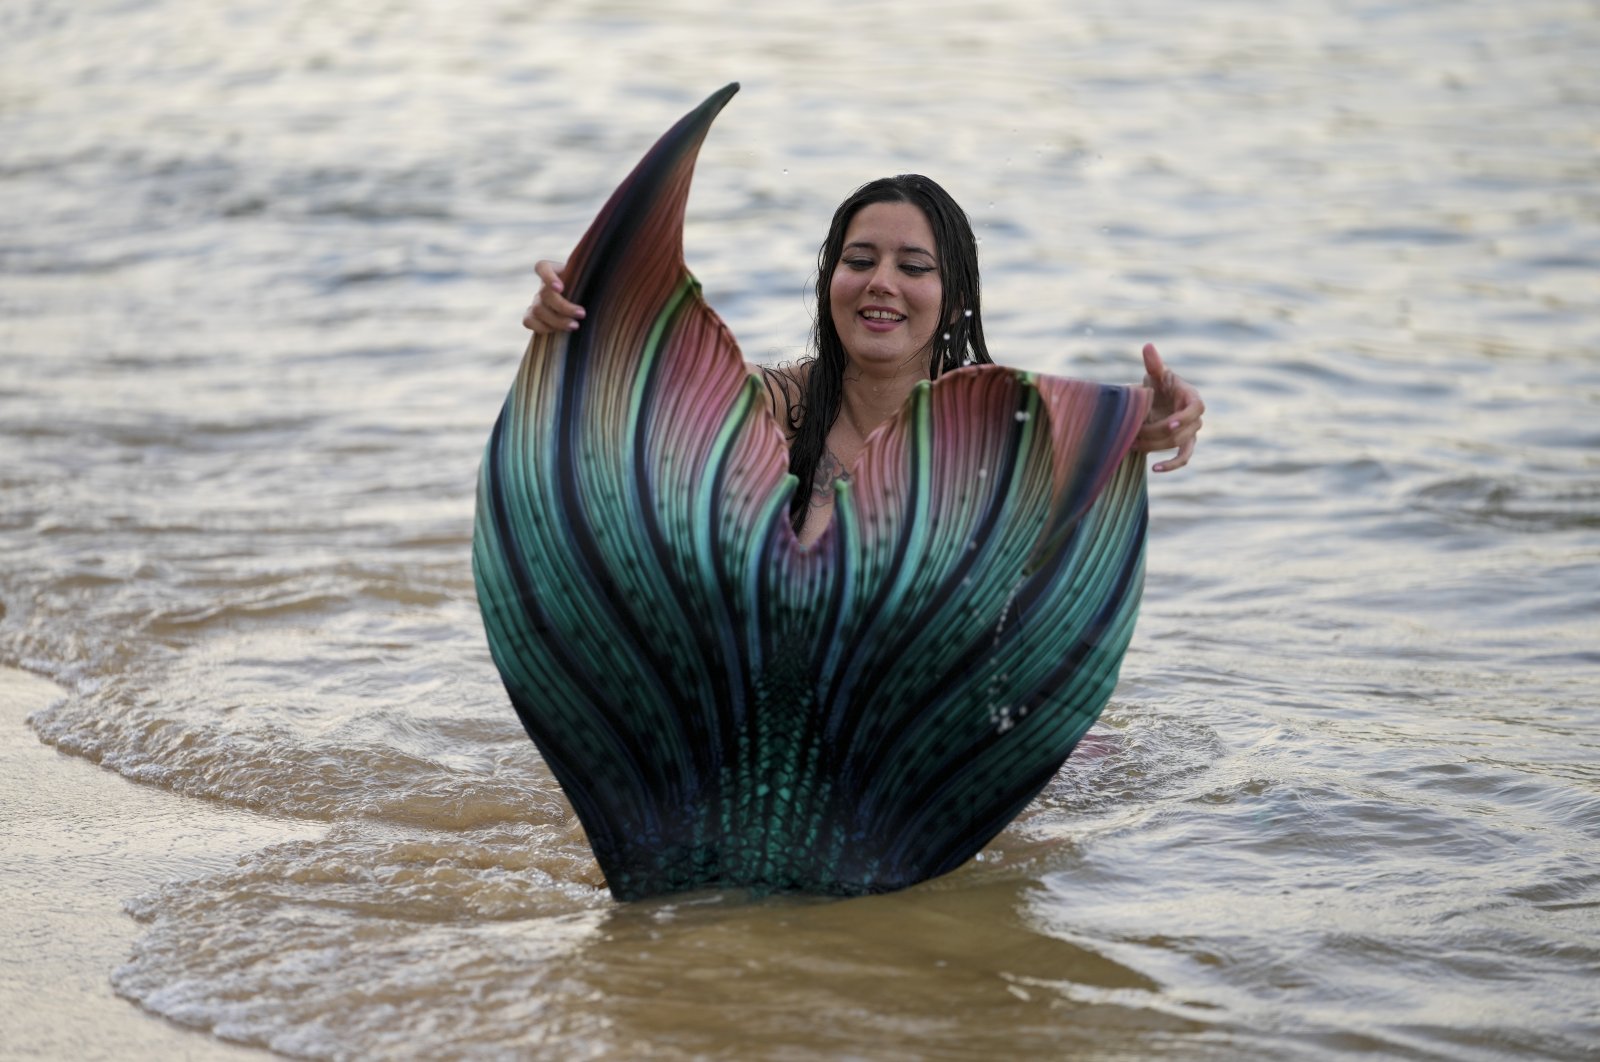 Lauren Metzler, founder of Sydney Mermaids, prepares for a swim at Manly Cove Beach in Sydney, Australia, May 26, 2022. (AP Photo)